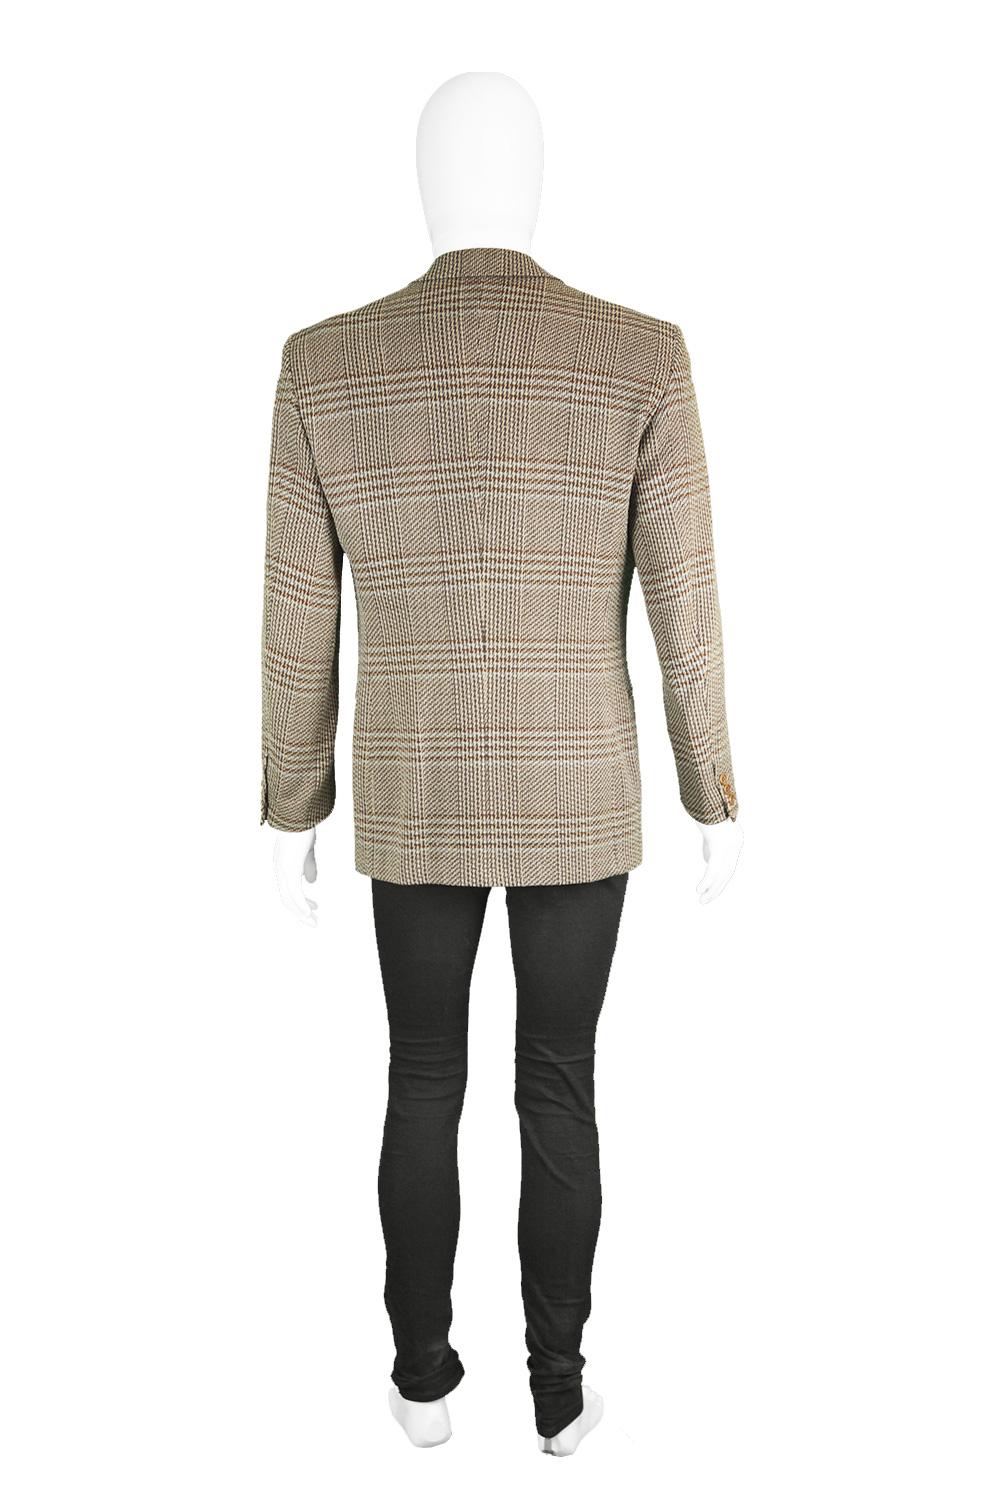 Giorgio Armani Men's Italian Wool Tweed Sportcoat Blazer Jacket, c. 1985 1